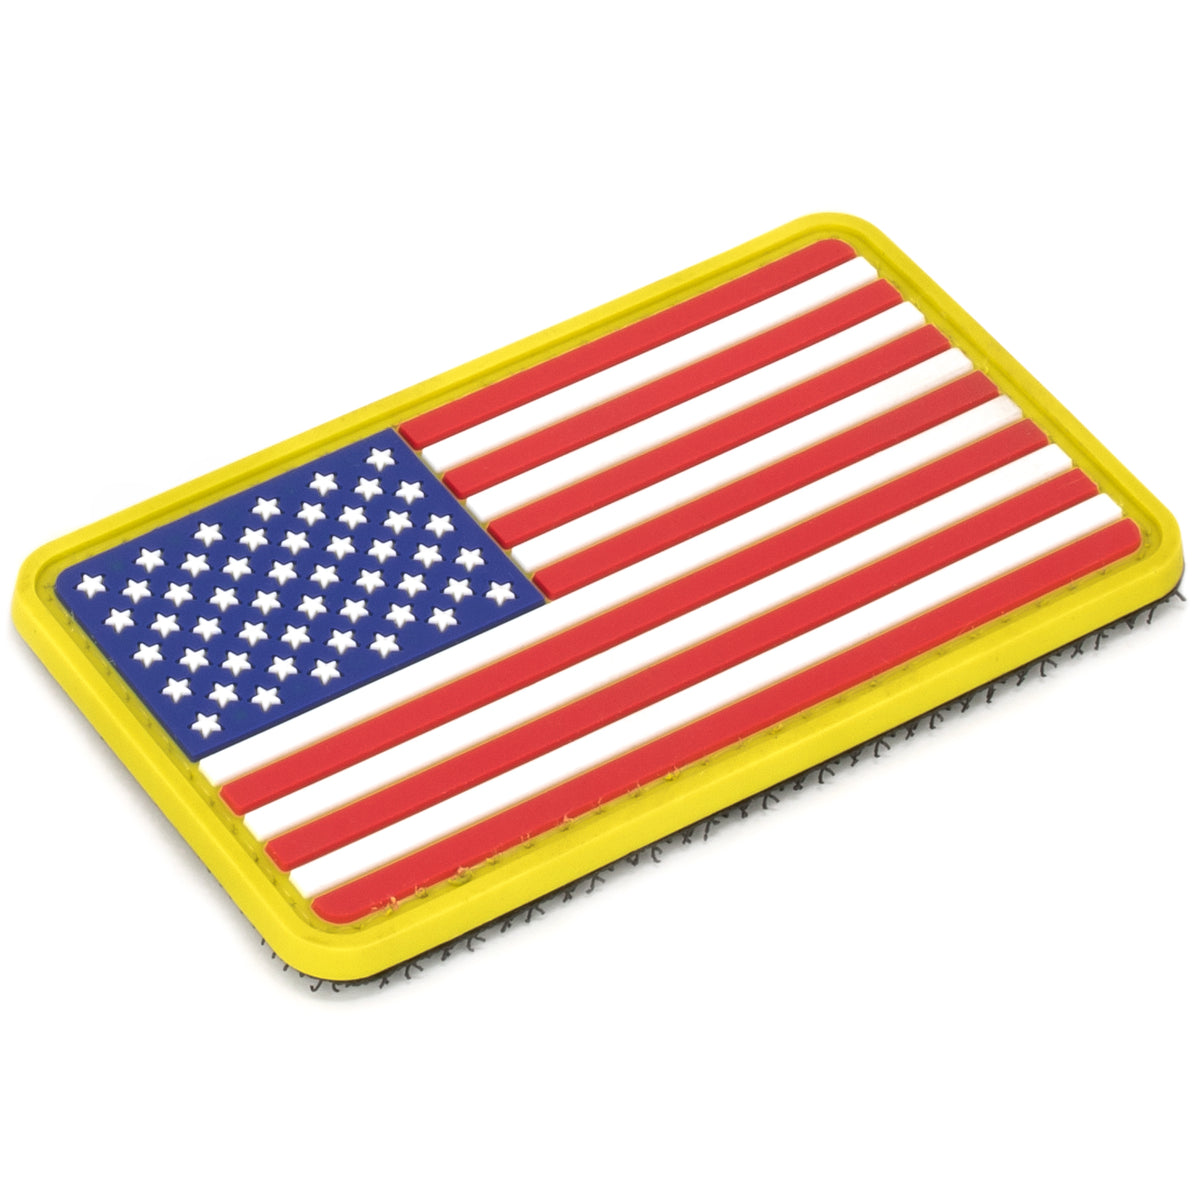 US Flag Patch | Velcro, 2" x 3.25"